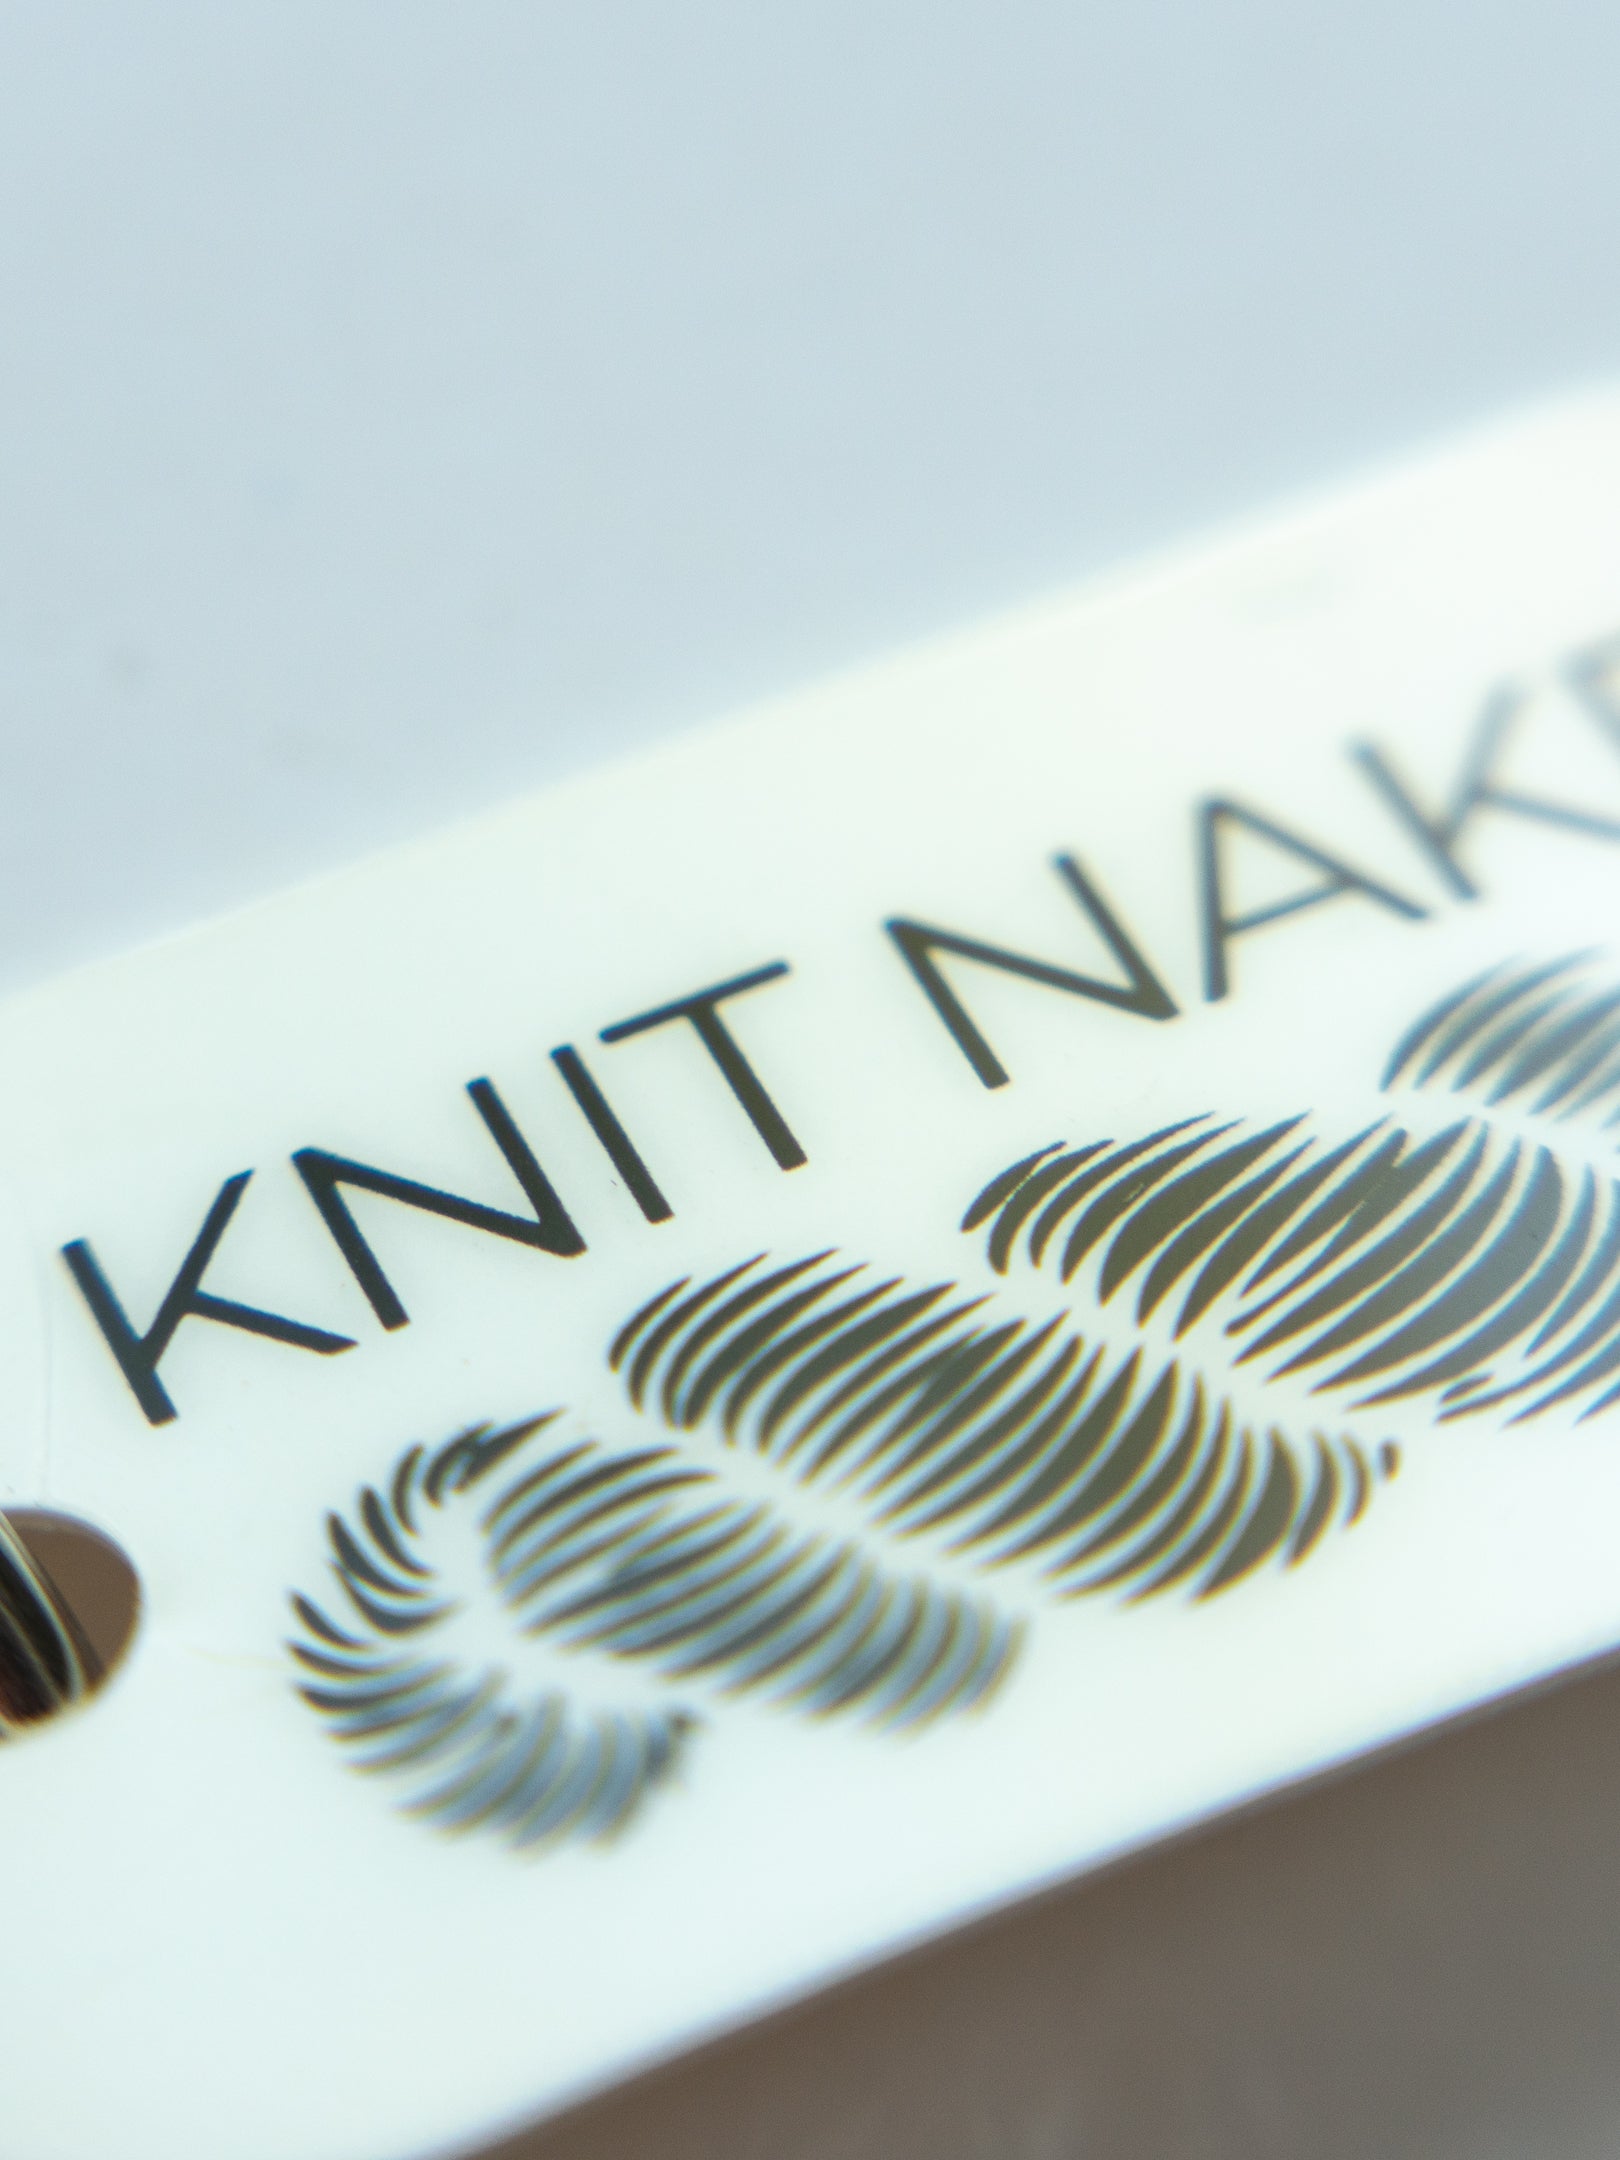 BNW "Knit Naked" Keytag